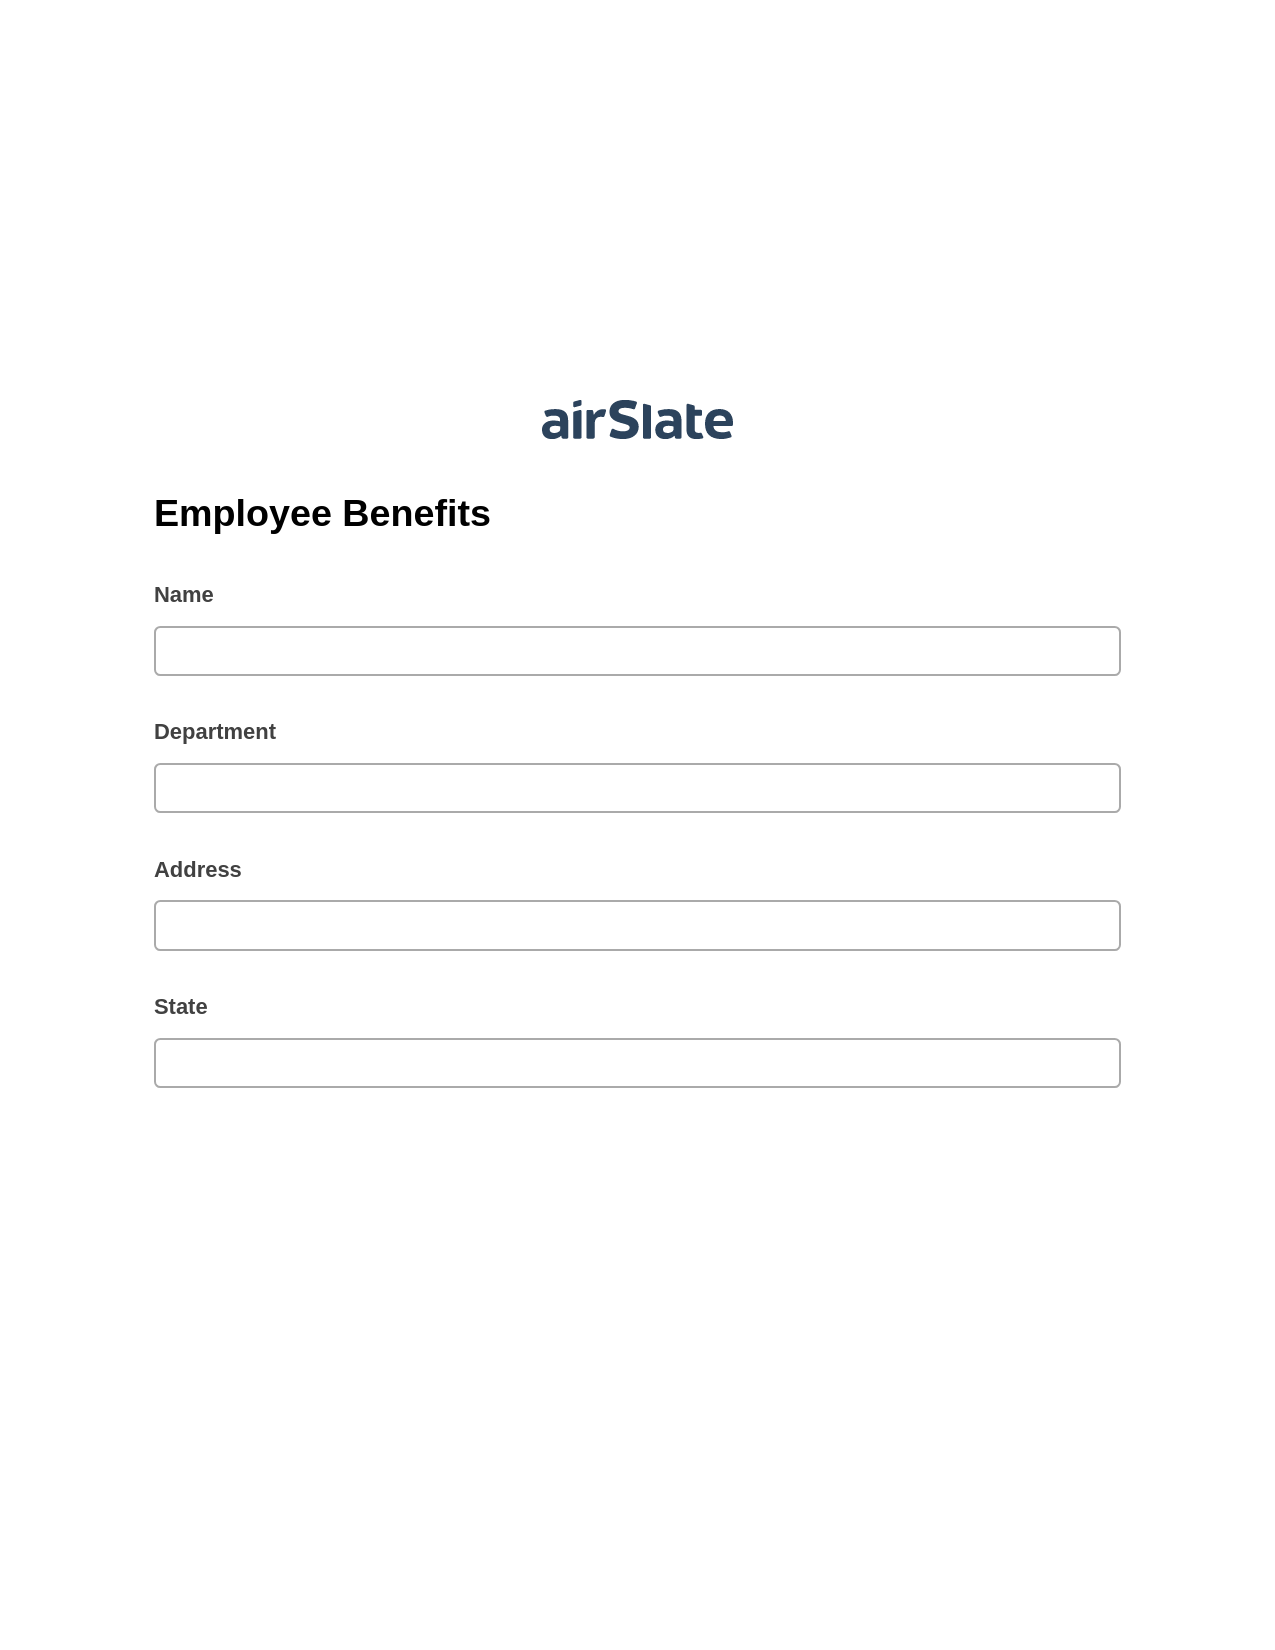 Employee Benefits Pre-fill from Excel Spreadsheet Bot, Create slate bot, Google Drive Bot